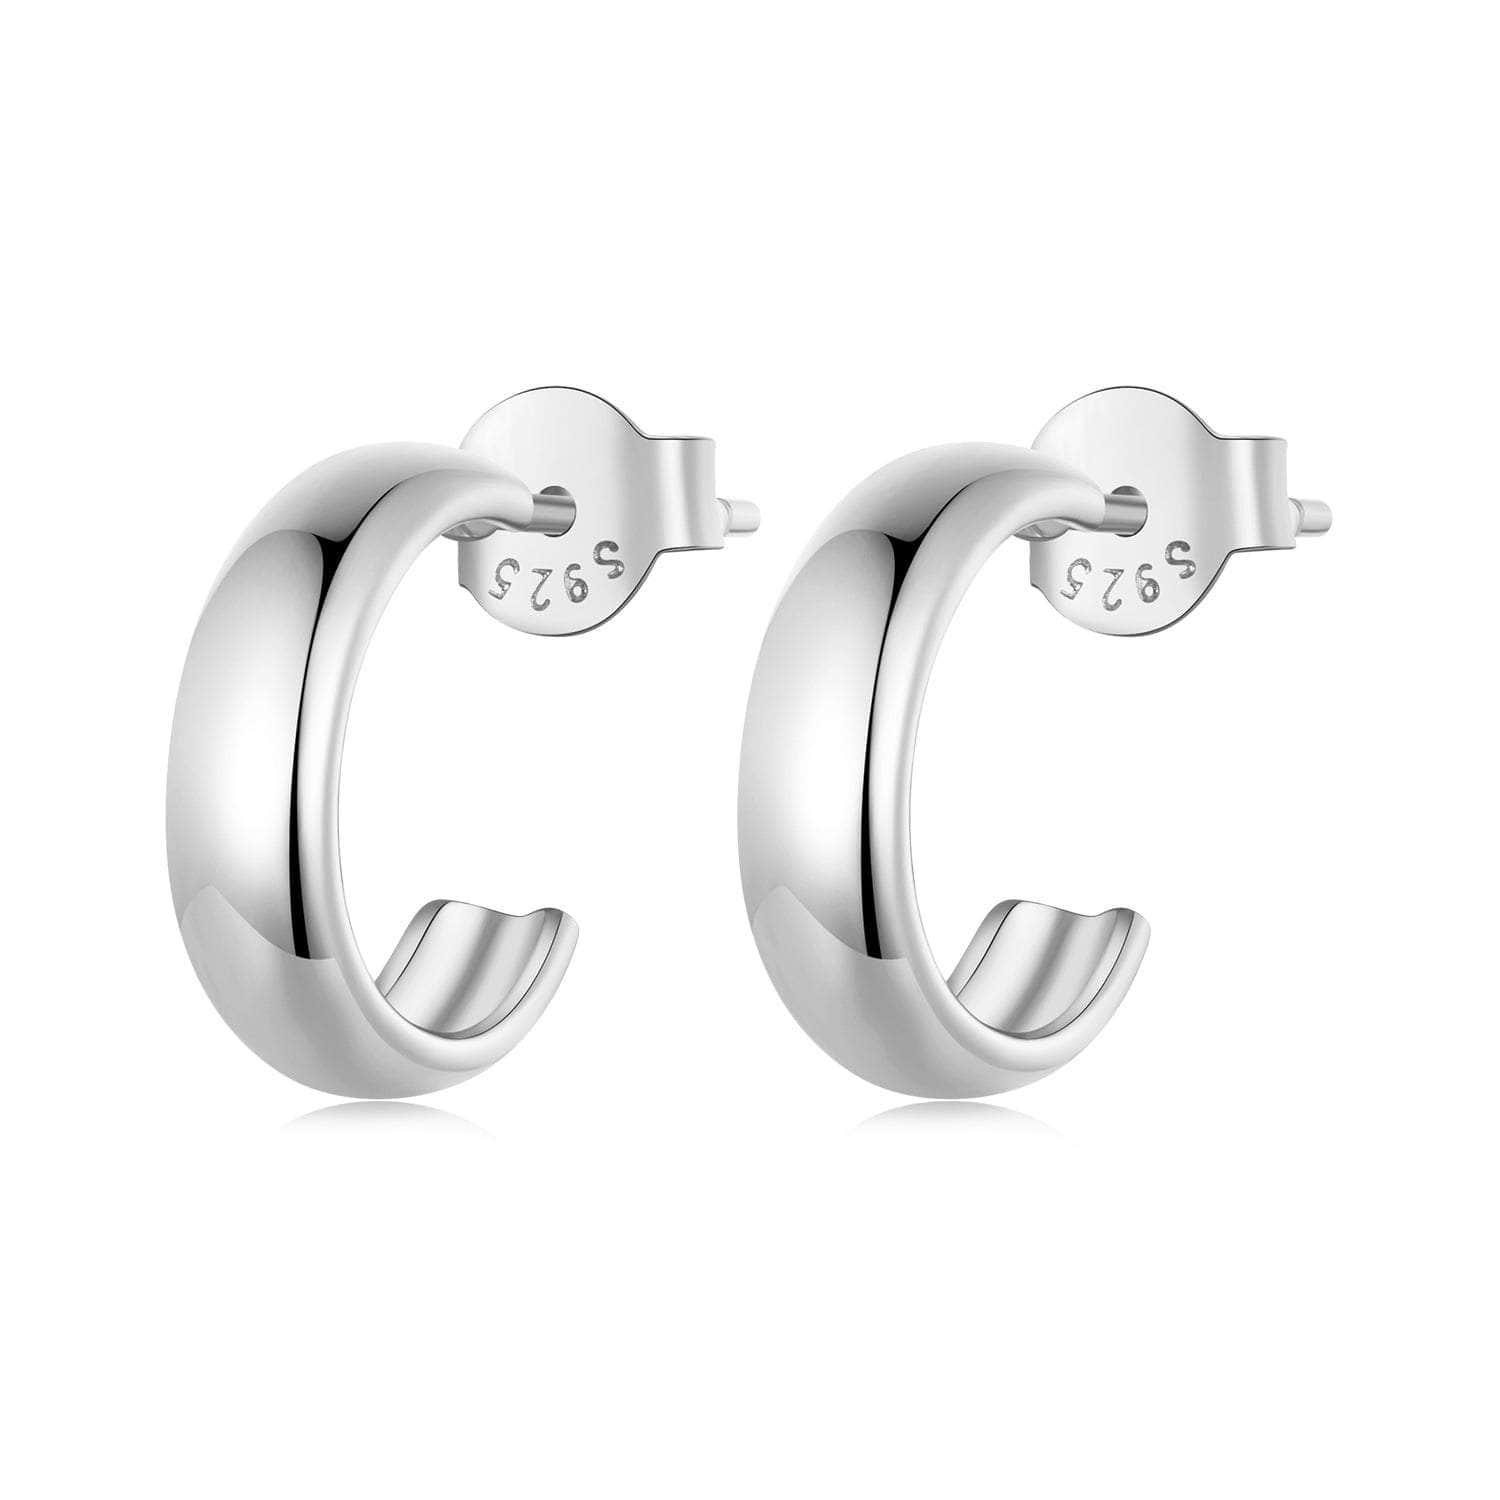 jewelaus Earrings Silver Half Hoops